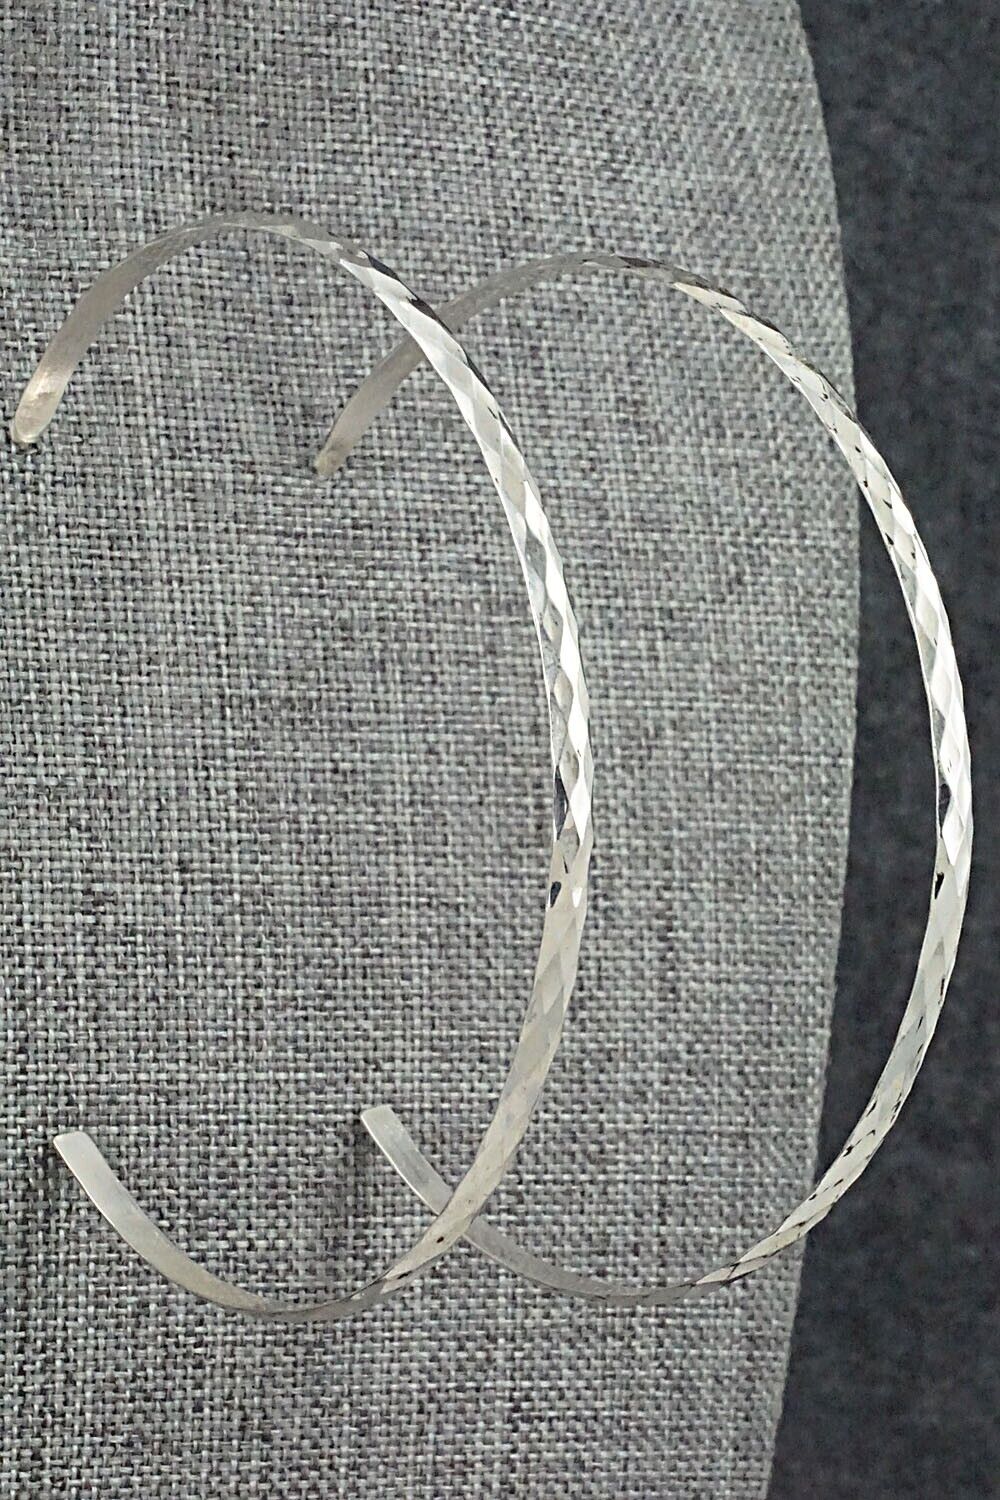 Sterling Silver Large Hoop Earrings - Nashina Leonard